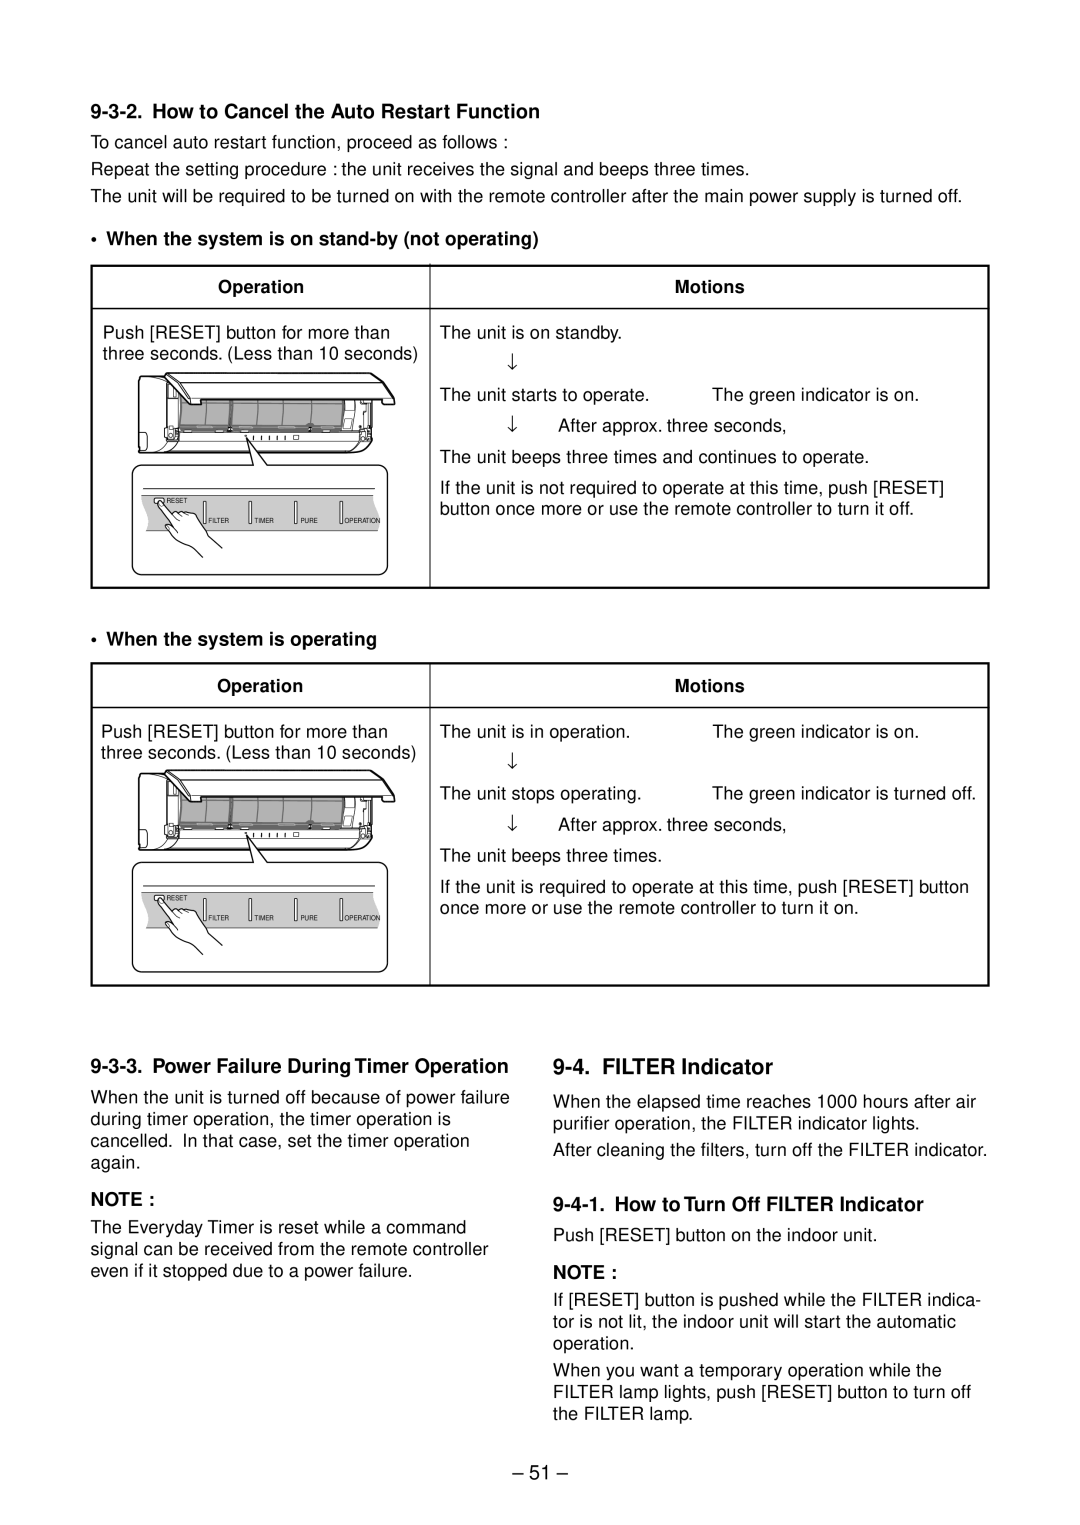 Toshiba RAS-B13SKVP-E, RAS-B10SKVP-E How to Cancel the Auto Restart Function, Power Failure During Timer Operation 